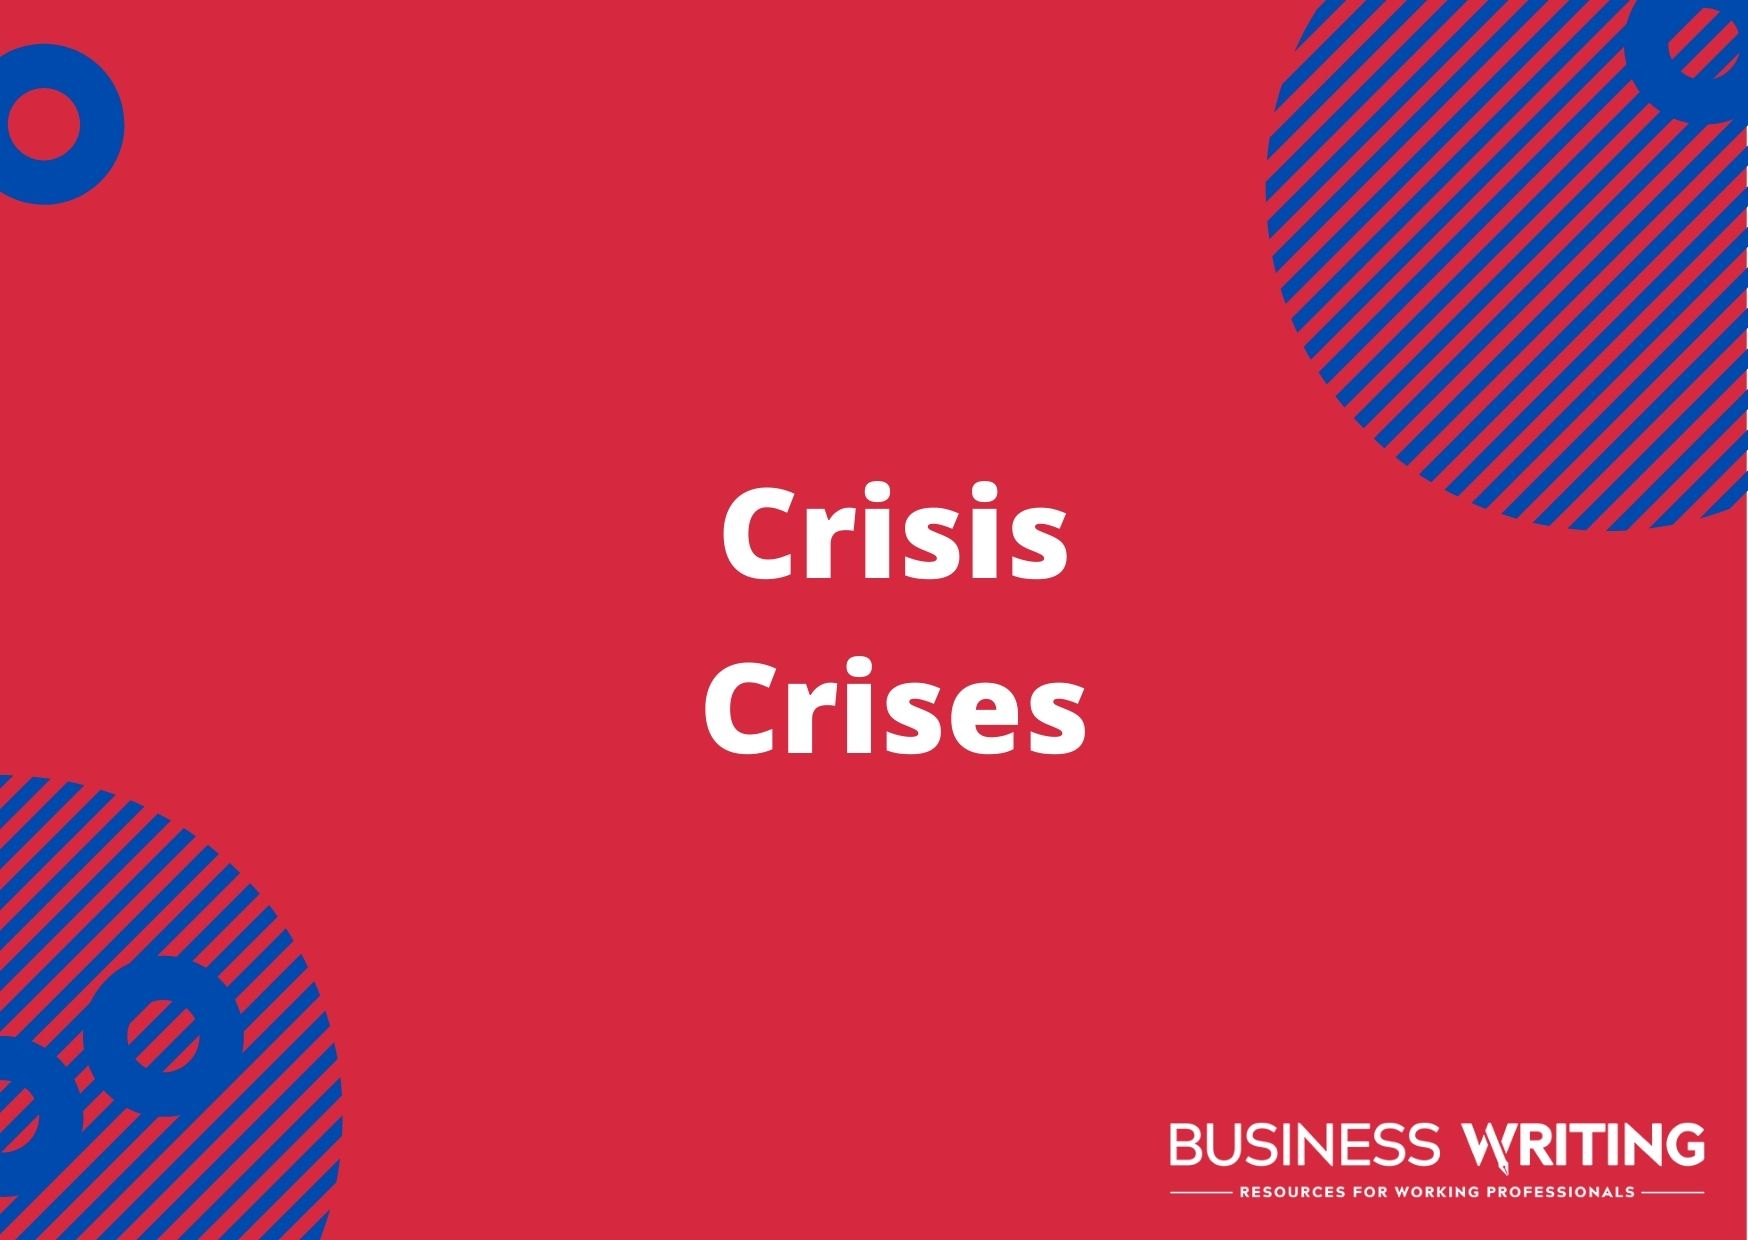 Crisis or Crises